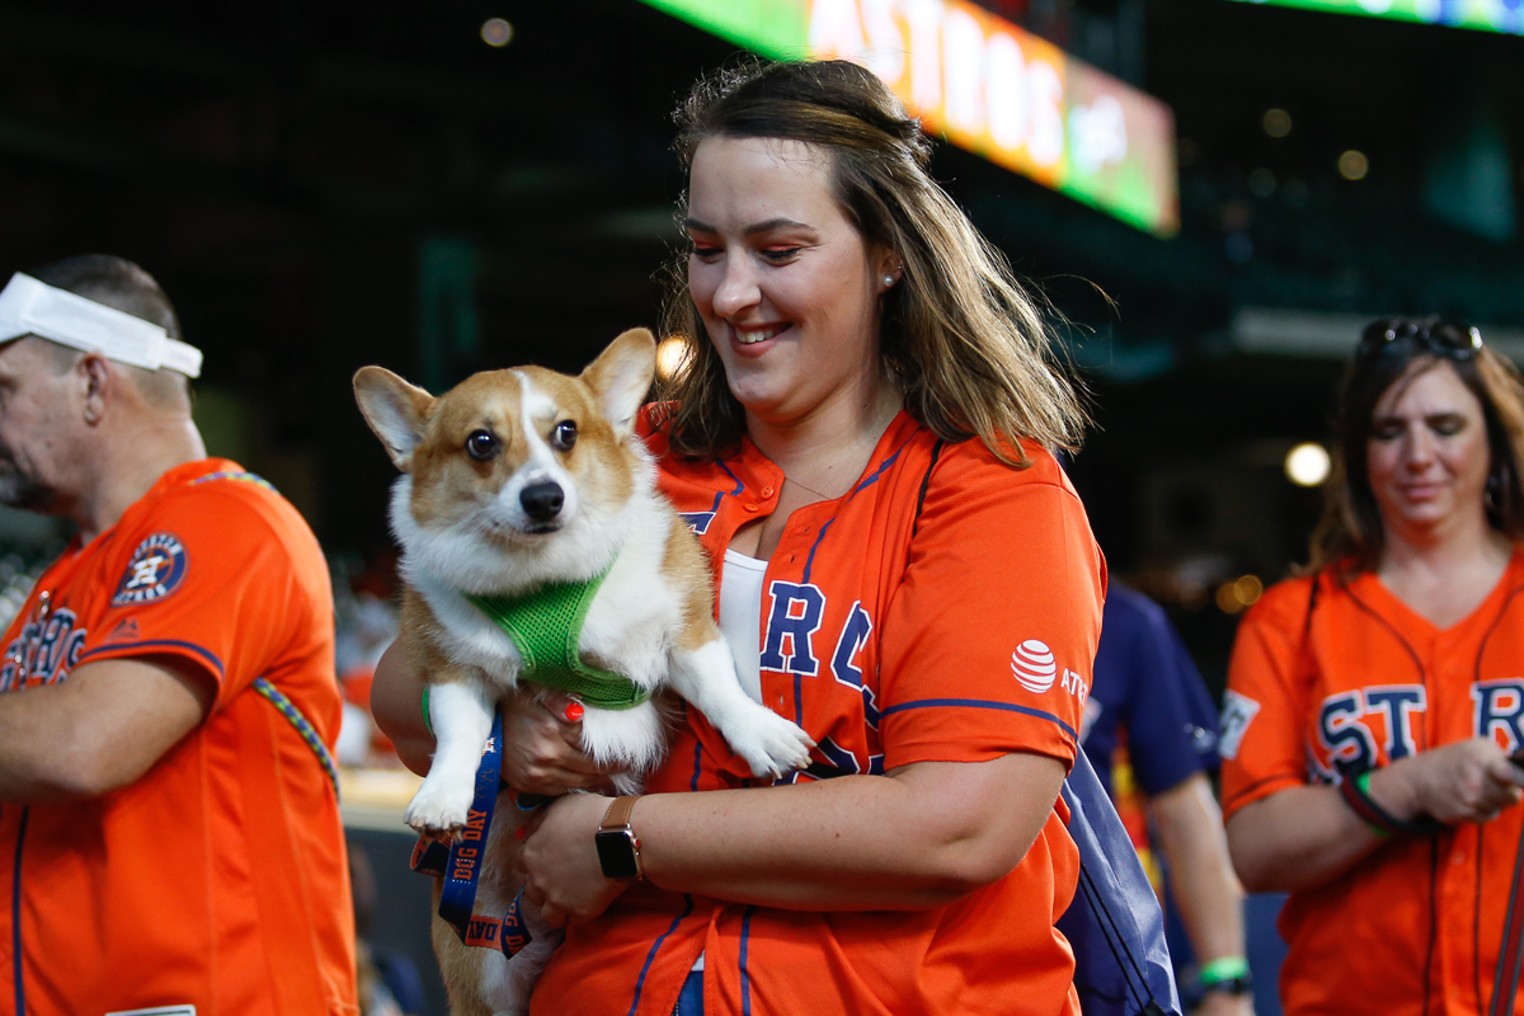 DOG DAY 2019. 12/10 good day. Baseball Doggos…, by Houston Astros